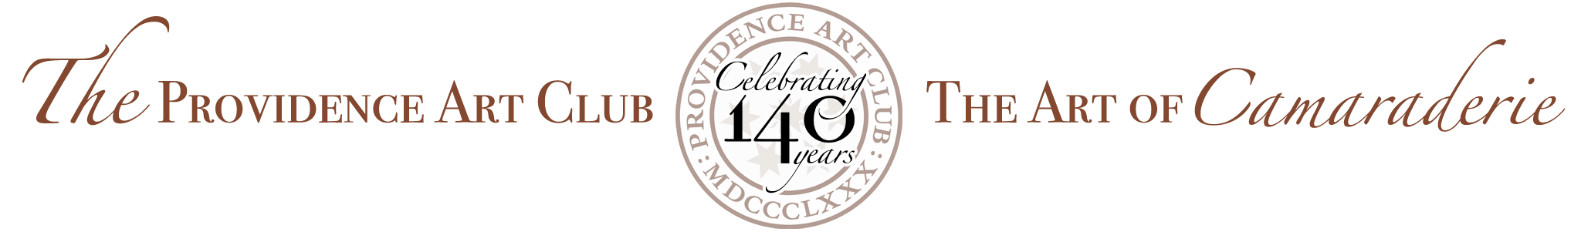 The Providence Art Club